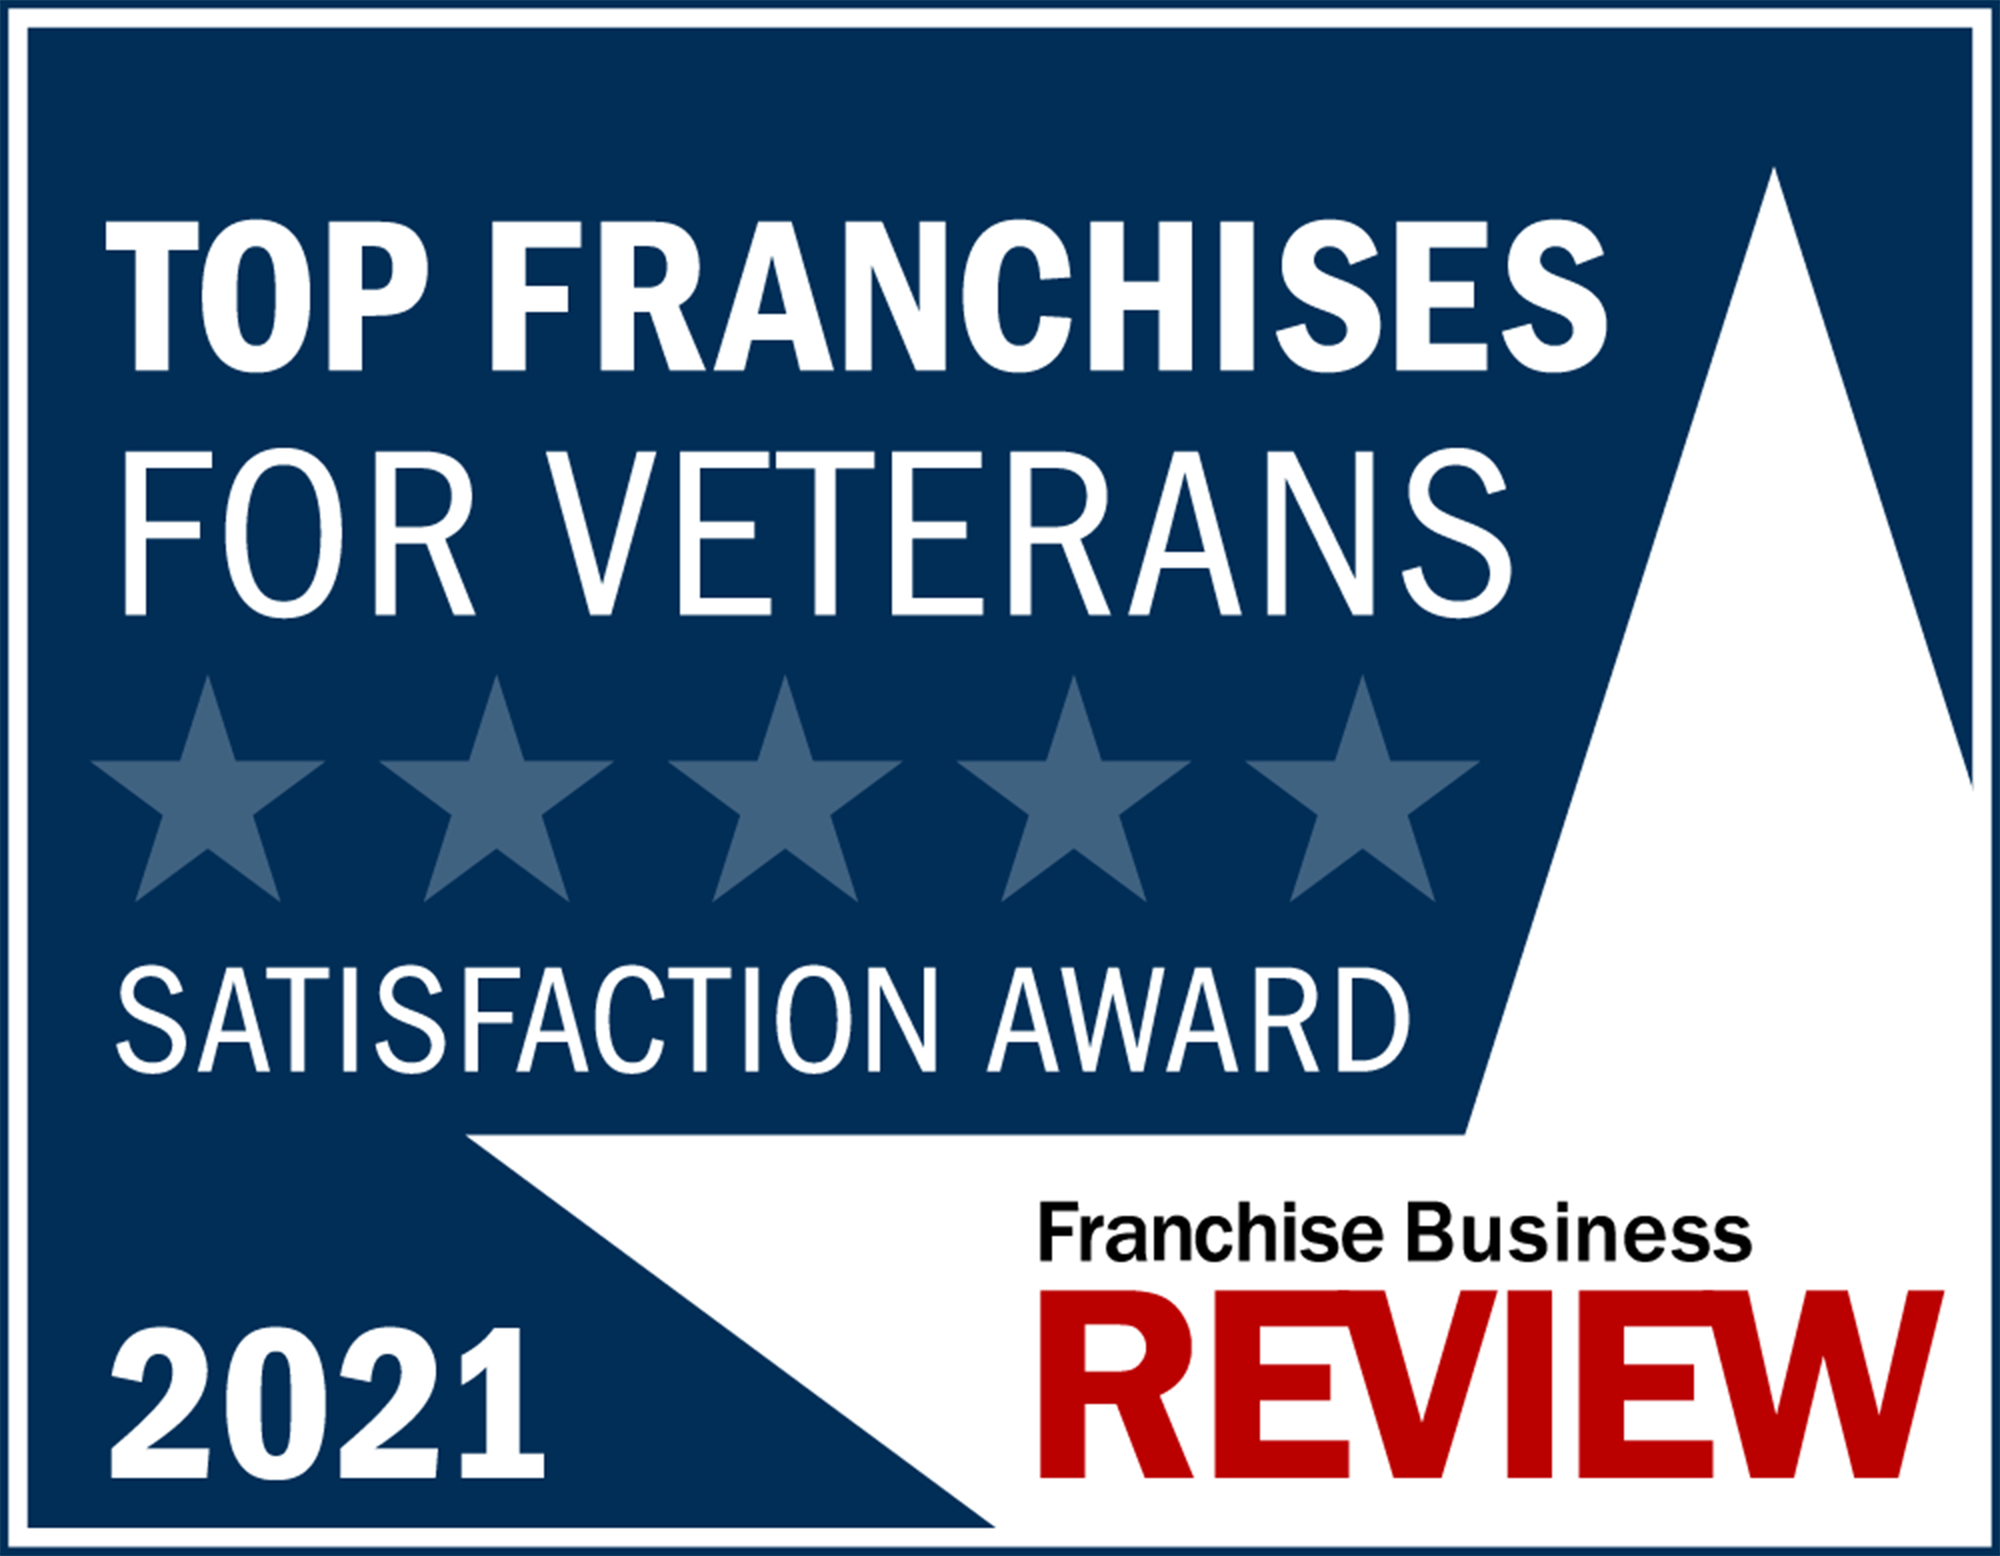 Franchise Business Review Top Franchises for Veterans - 2021